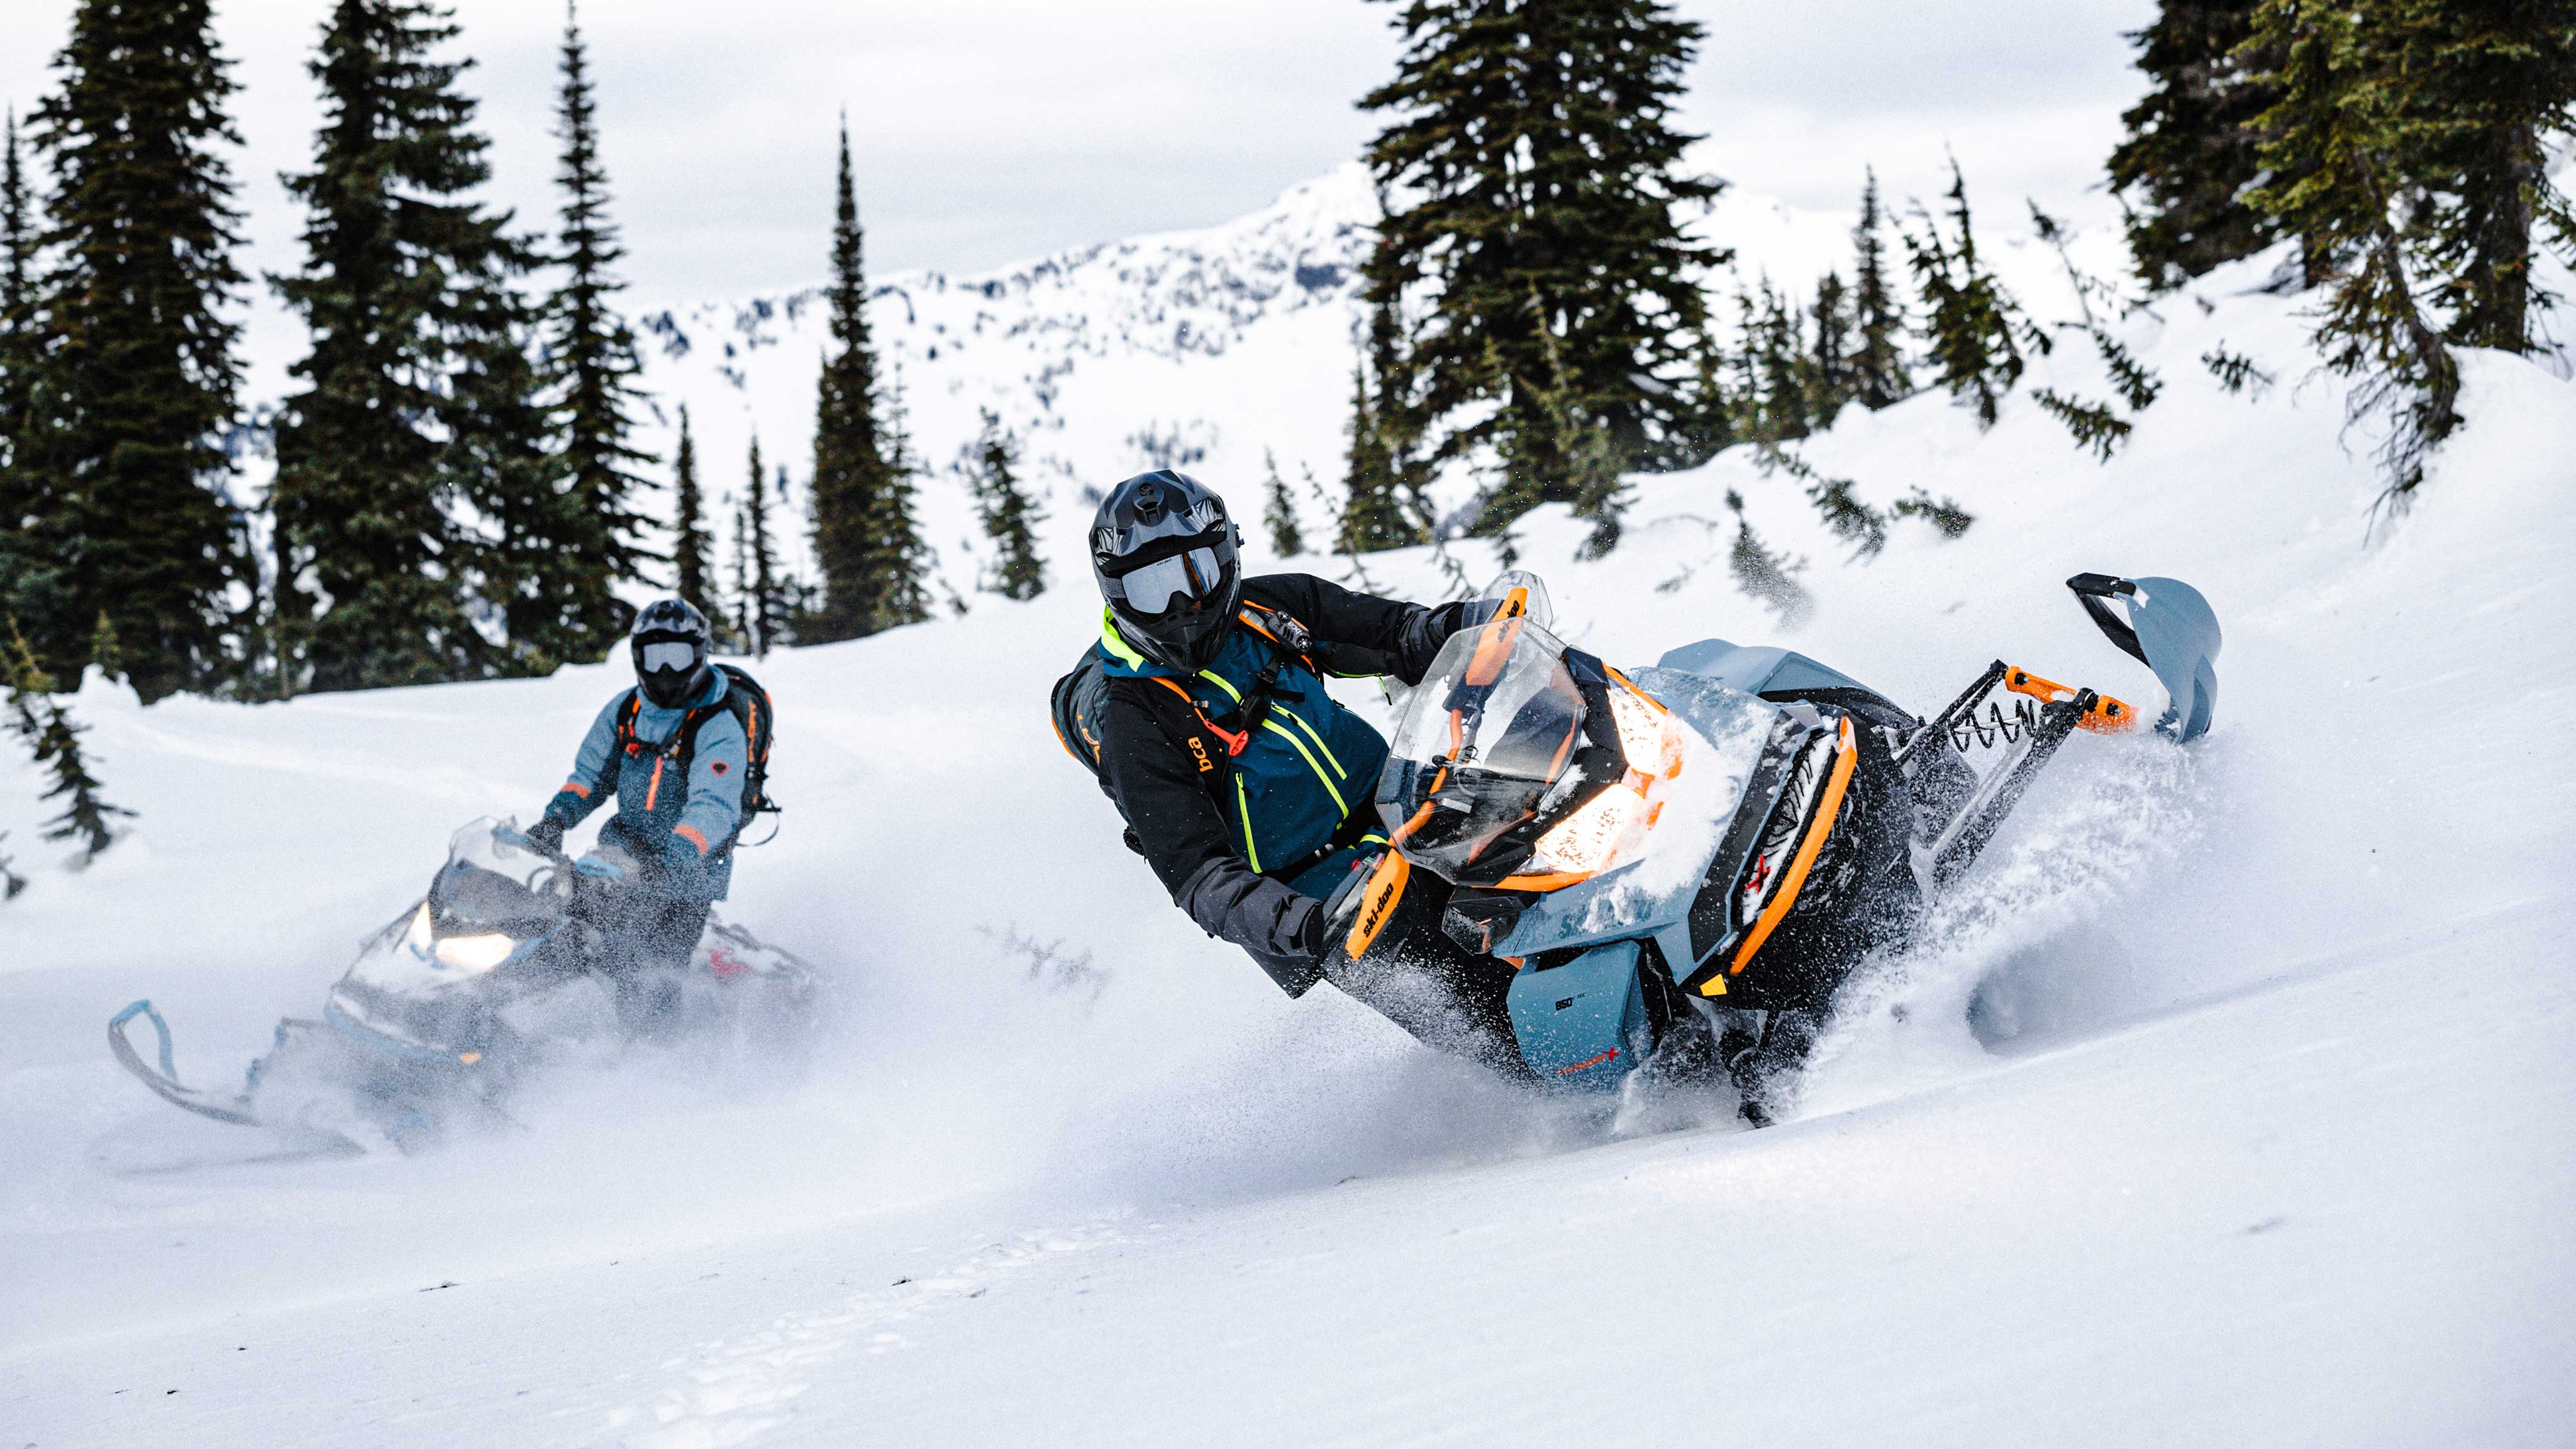 2 riders riding the new 2022 Ski-Doo Backcountry